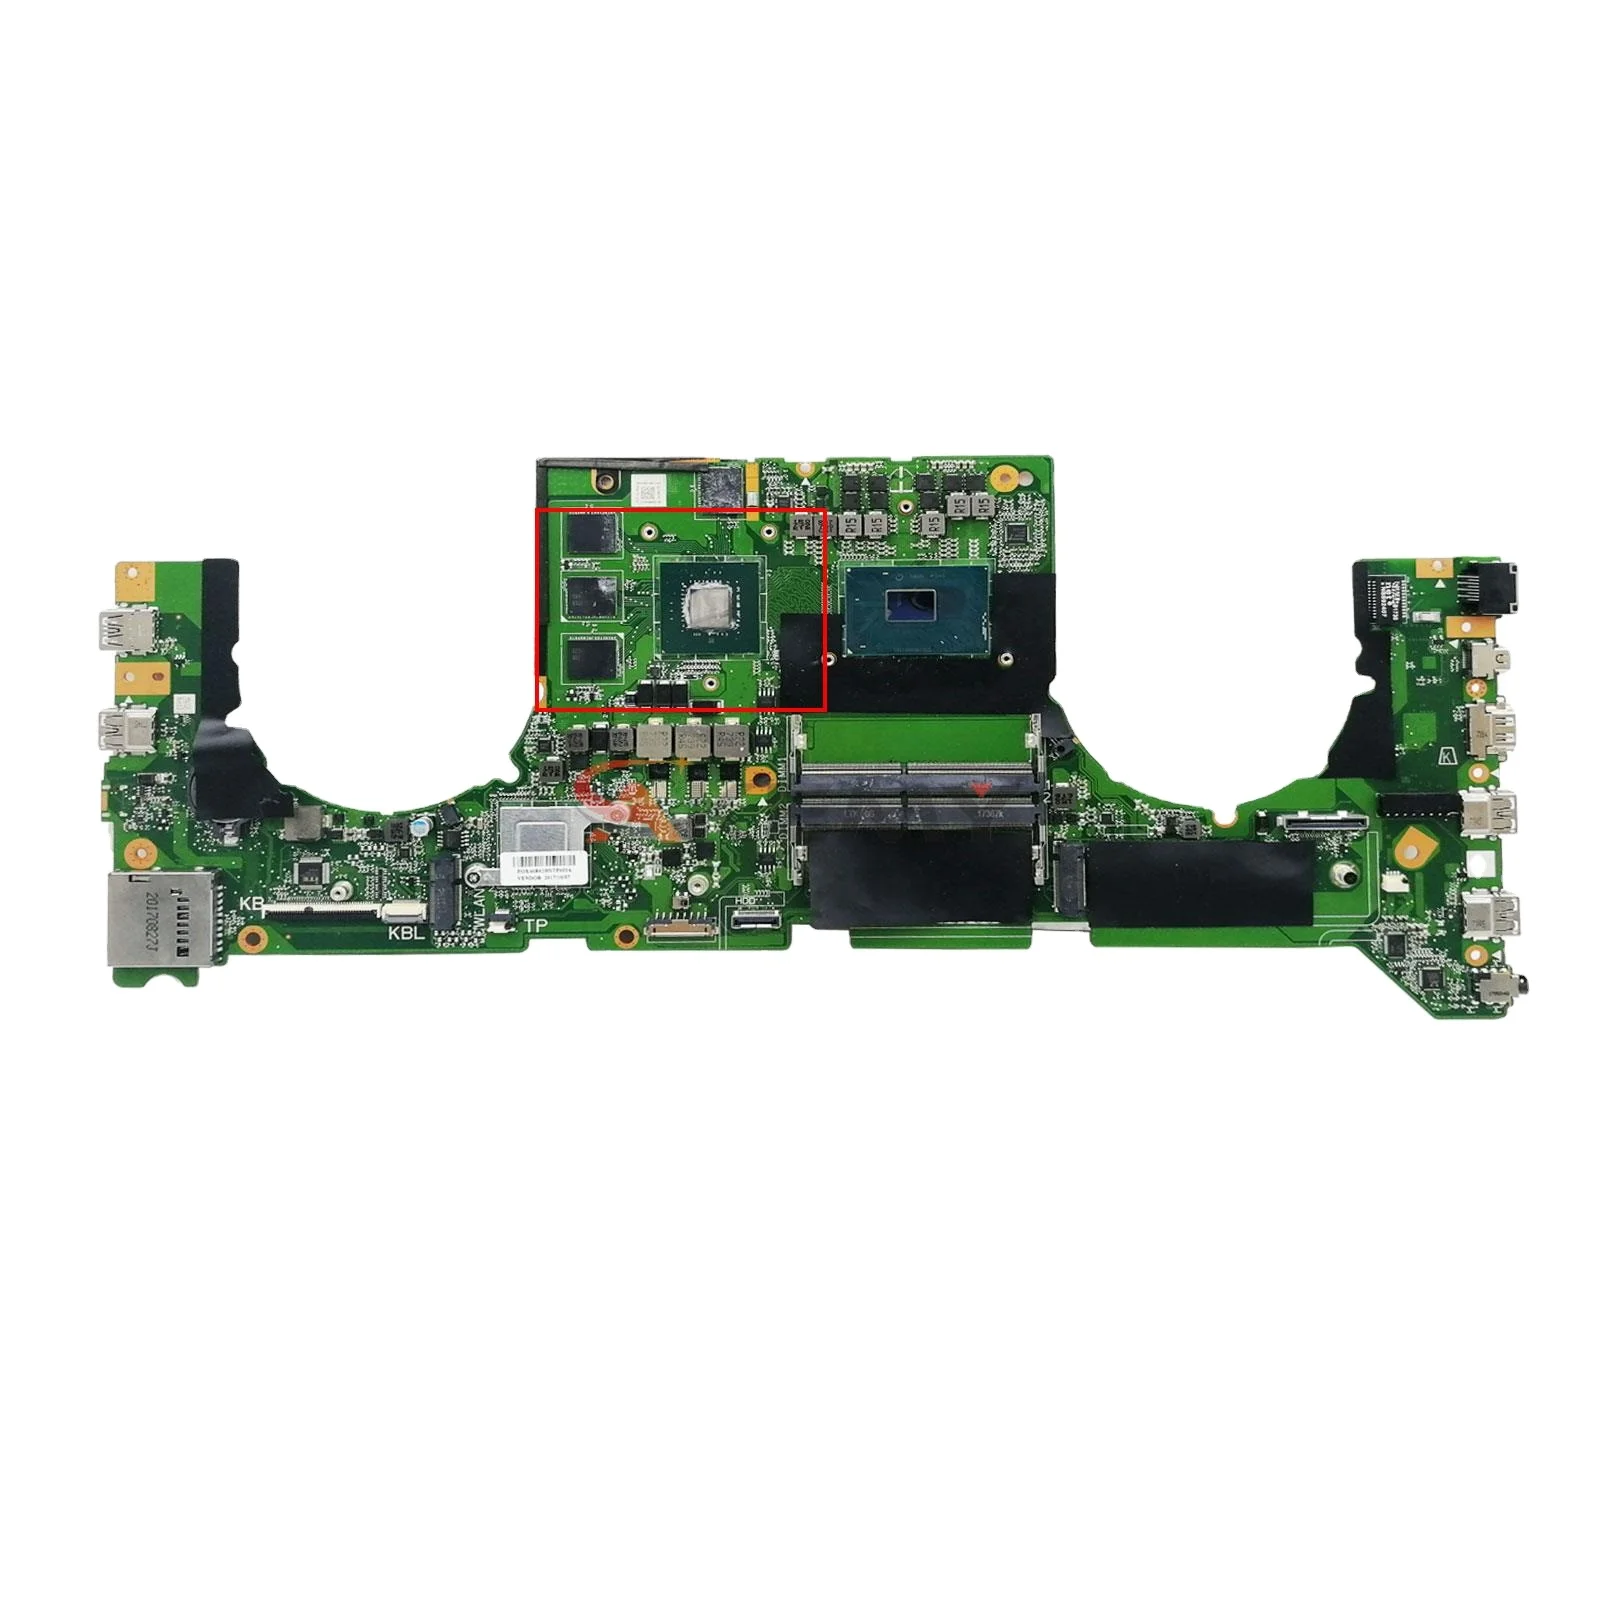 

DABKNMB28A0 Mainboard For ASUS ROG Strix GL703VD Laptop Motherboard I5 I7 7th Gen GTX1050/4G MAIN BOARD